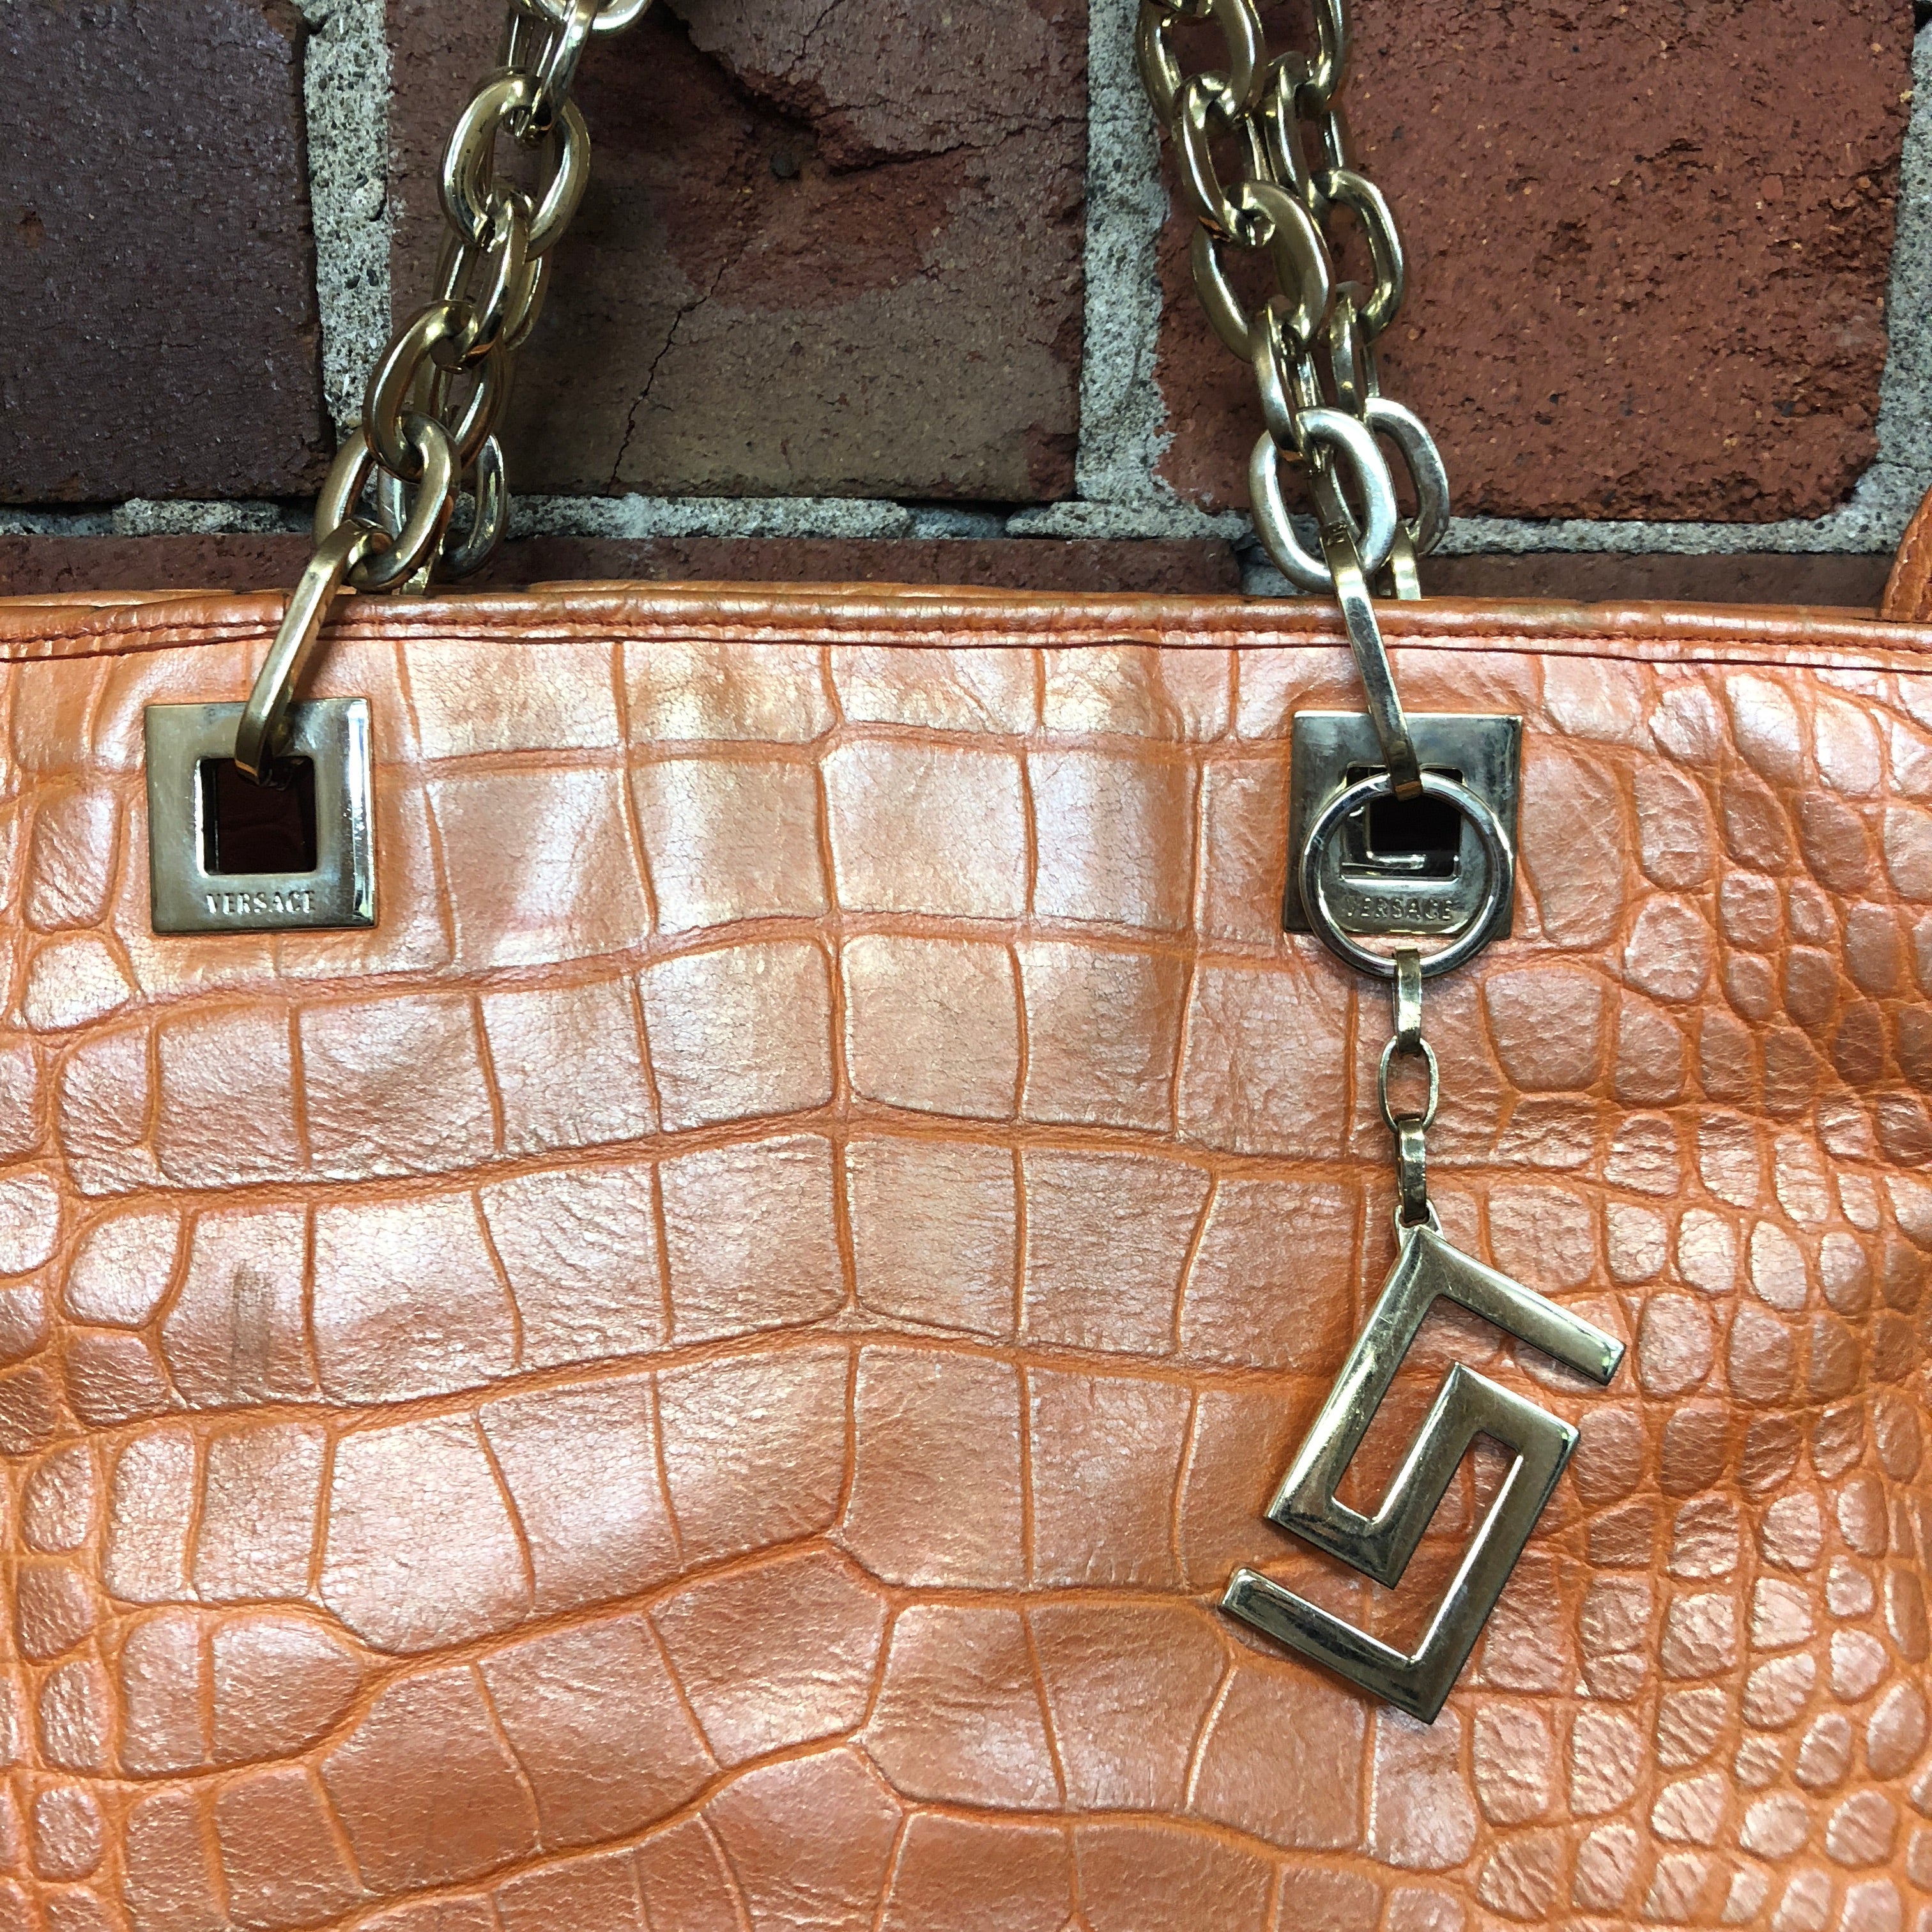 VERSACE authentic leather crocodile printed handbag